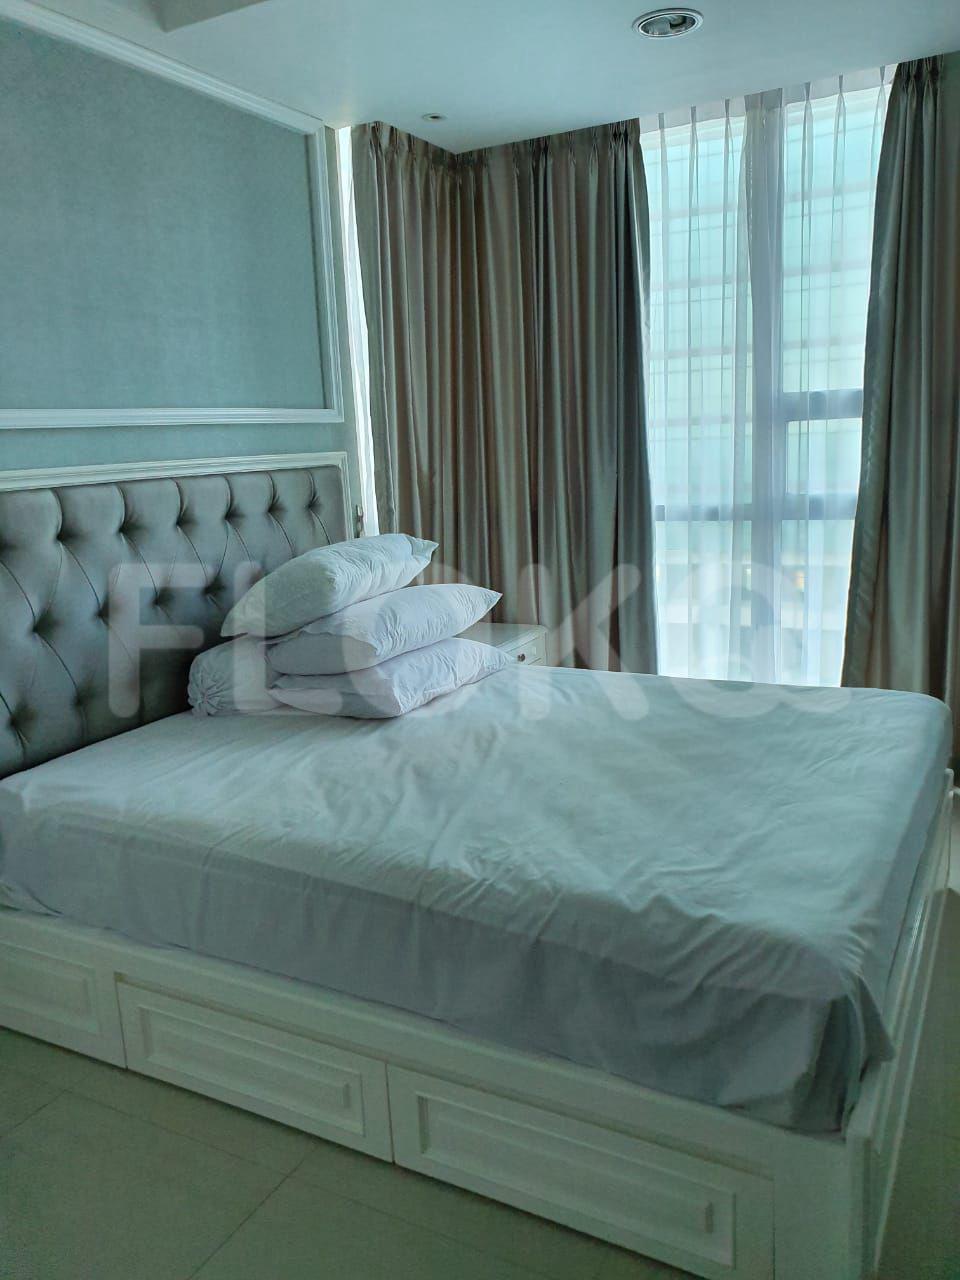 2 Bedroom on 16th Floor fke113 for Rent in Kemang Village Residence